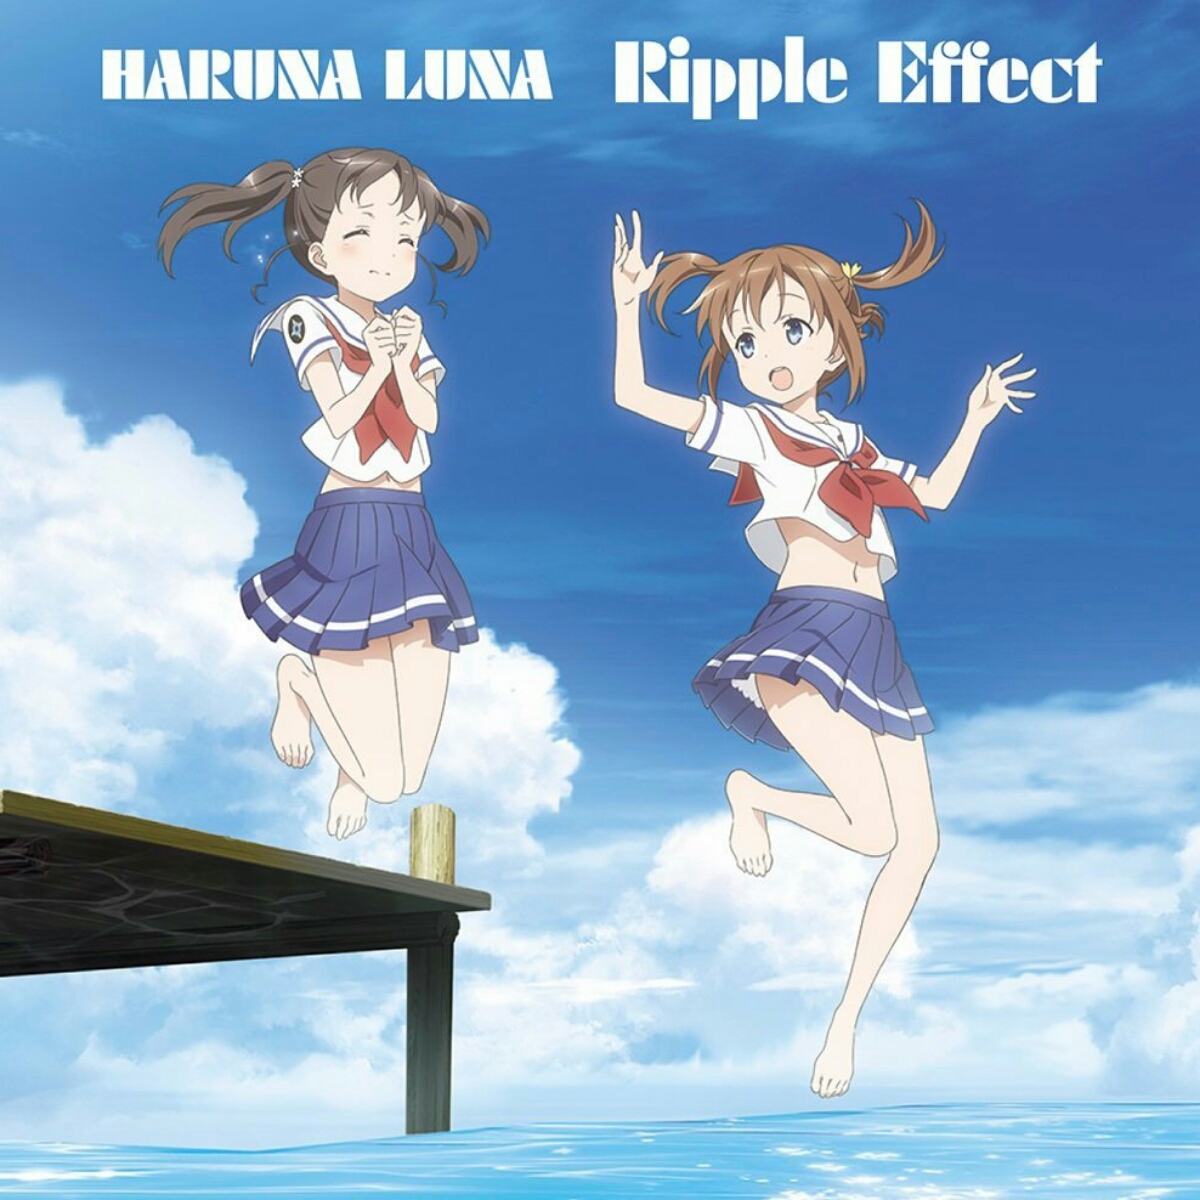 Luna Haruna - Ripple Effect